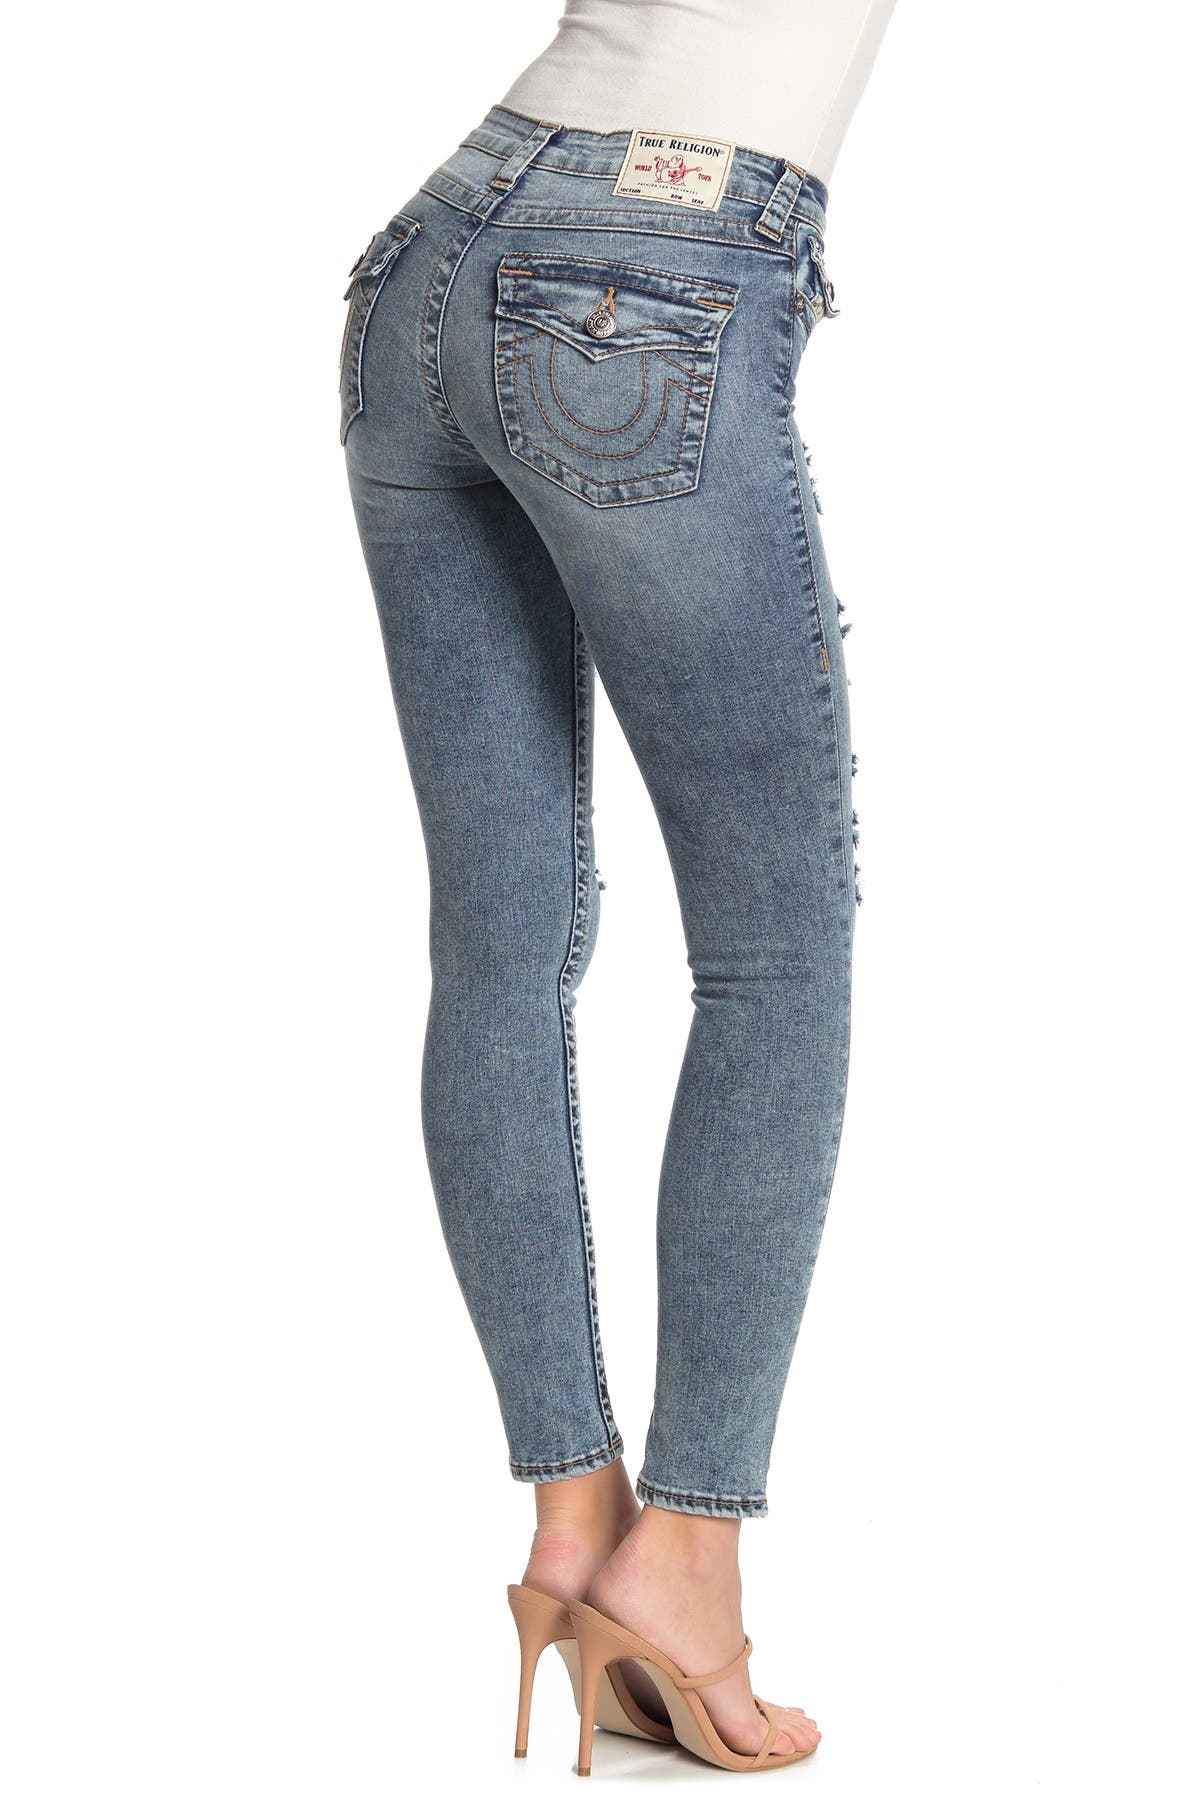 true religion women's jeans nordstrom